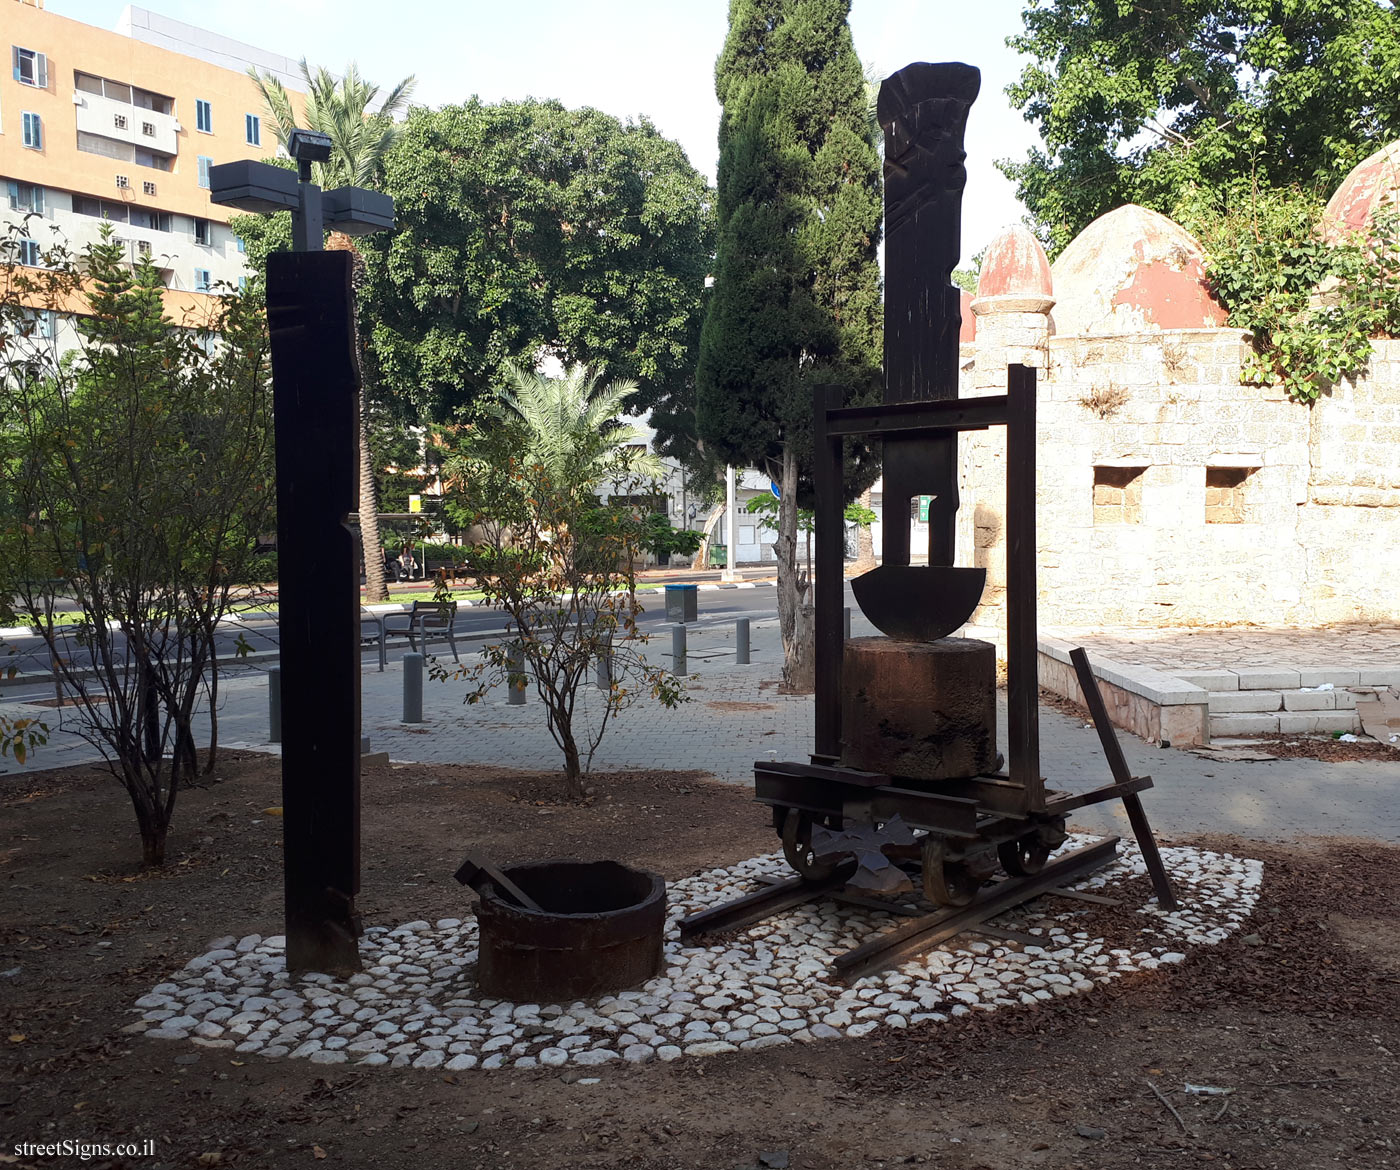 Tel Aviv - Tomarkin sculptures at Abu Nabot Park - Kafka Machine